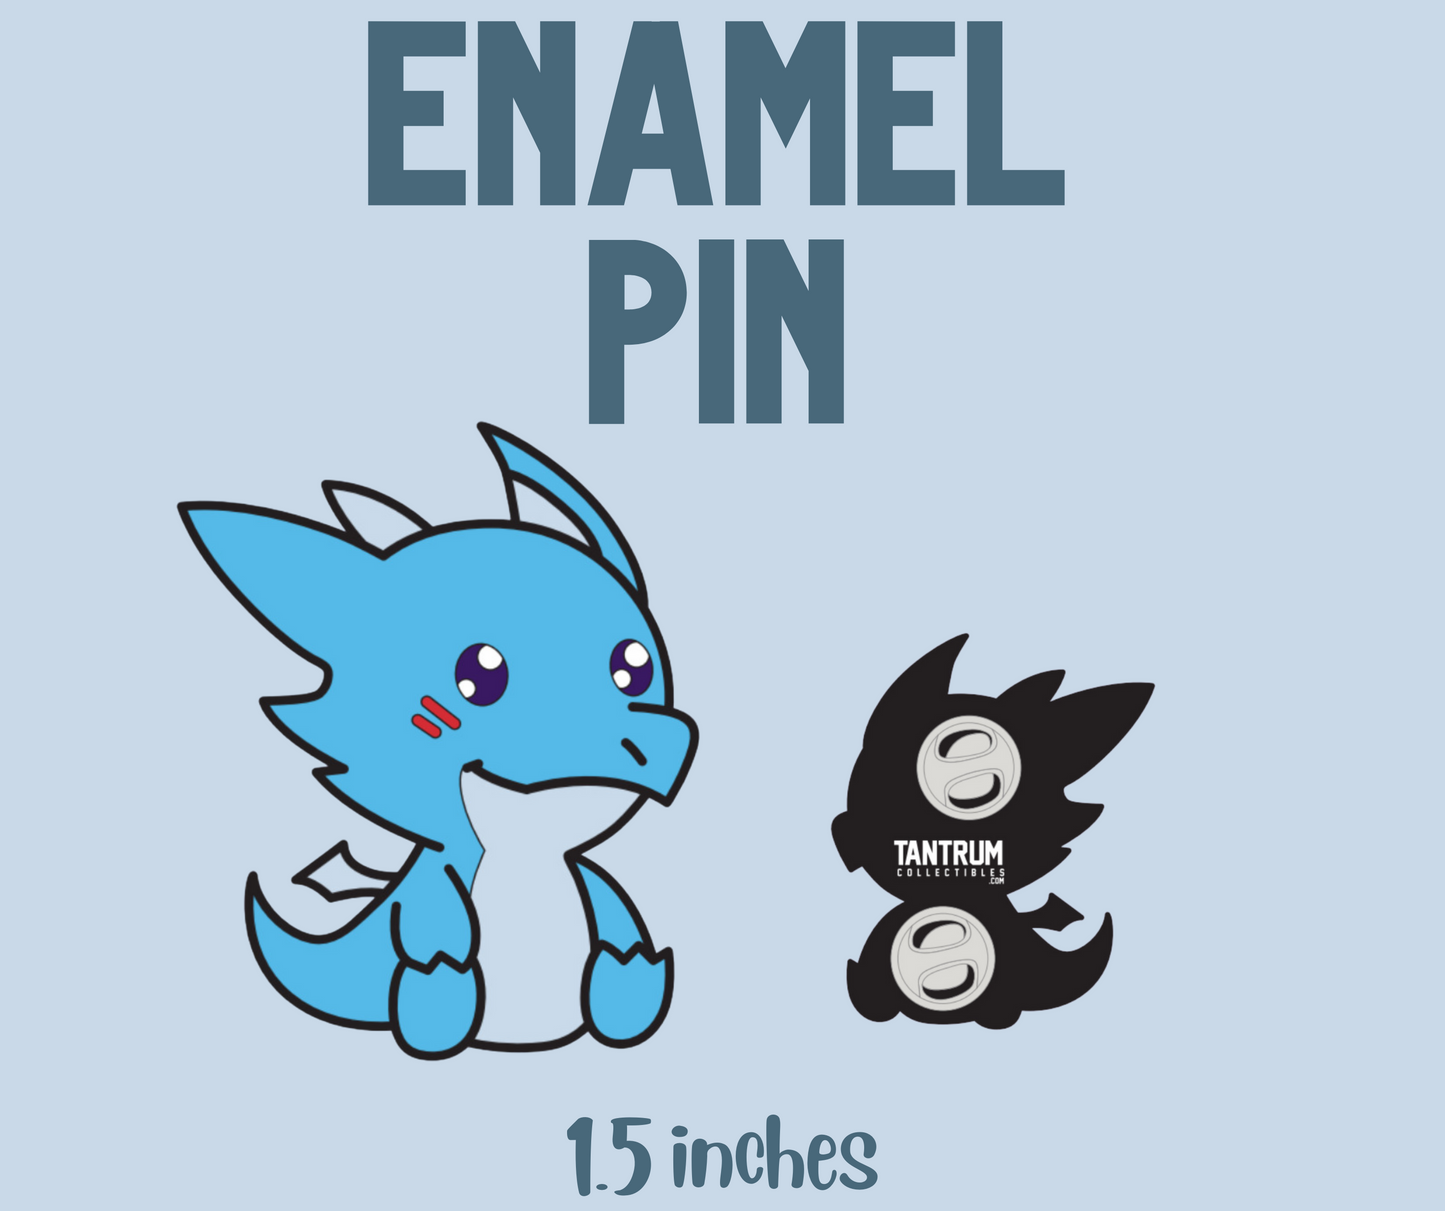 The Dragon Feeney - Enamel Pin - Sit